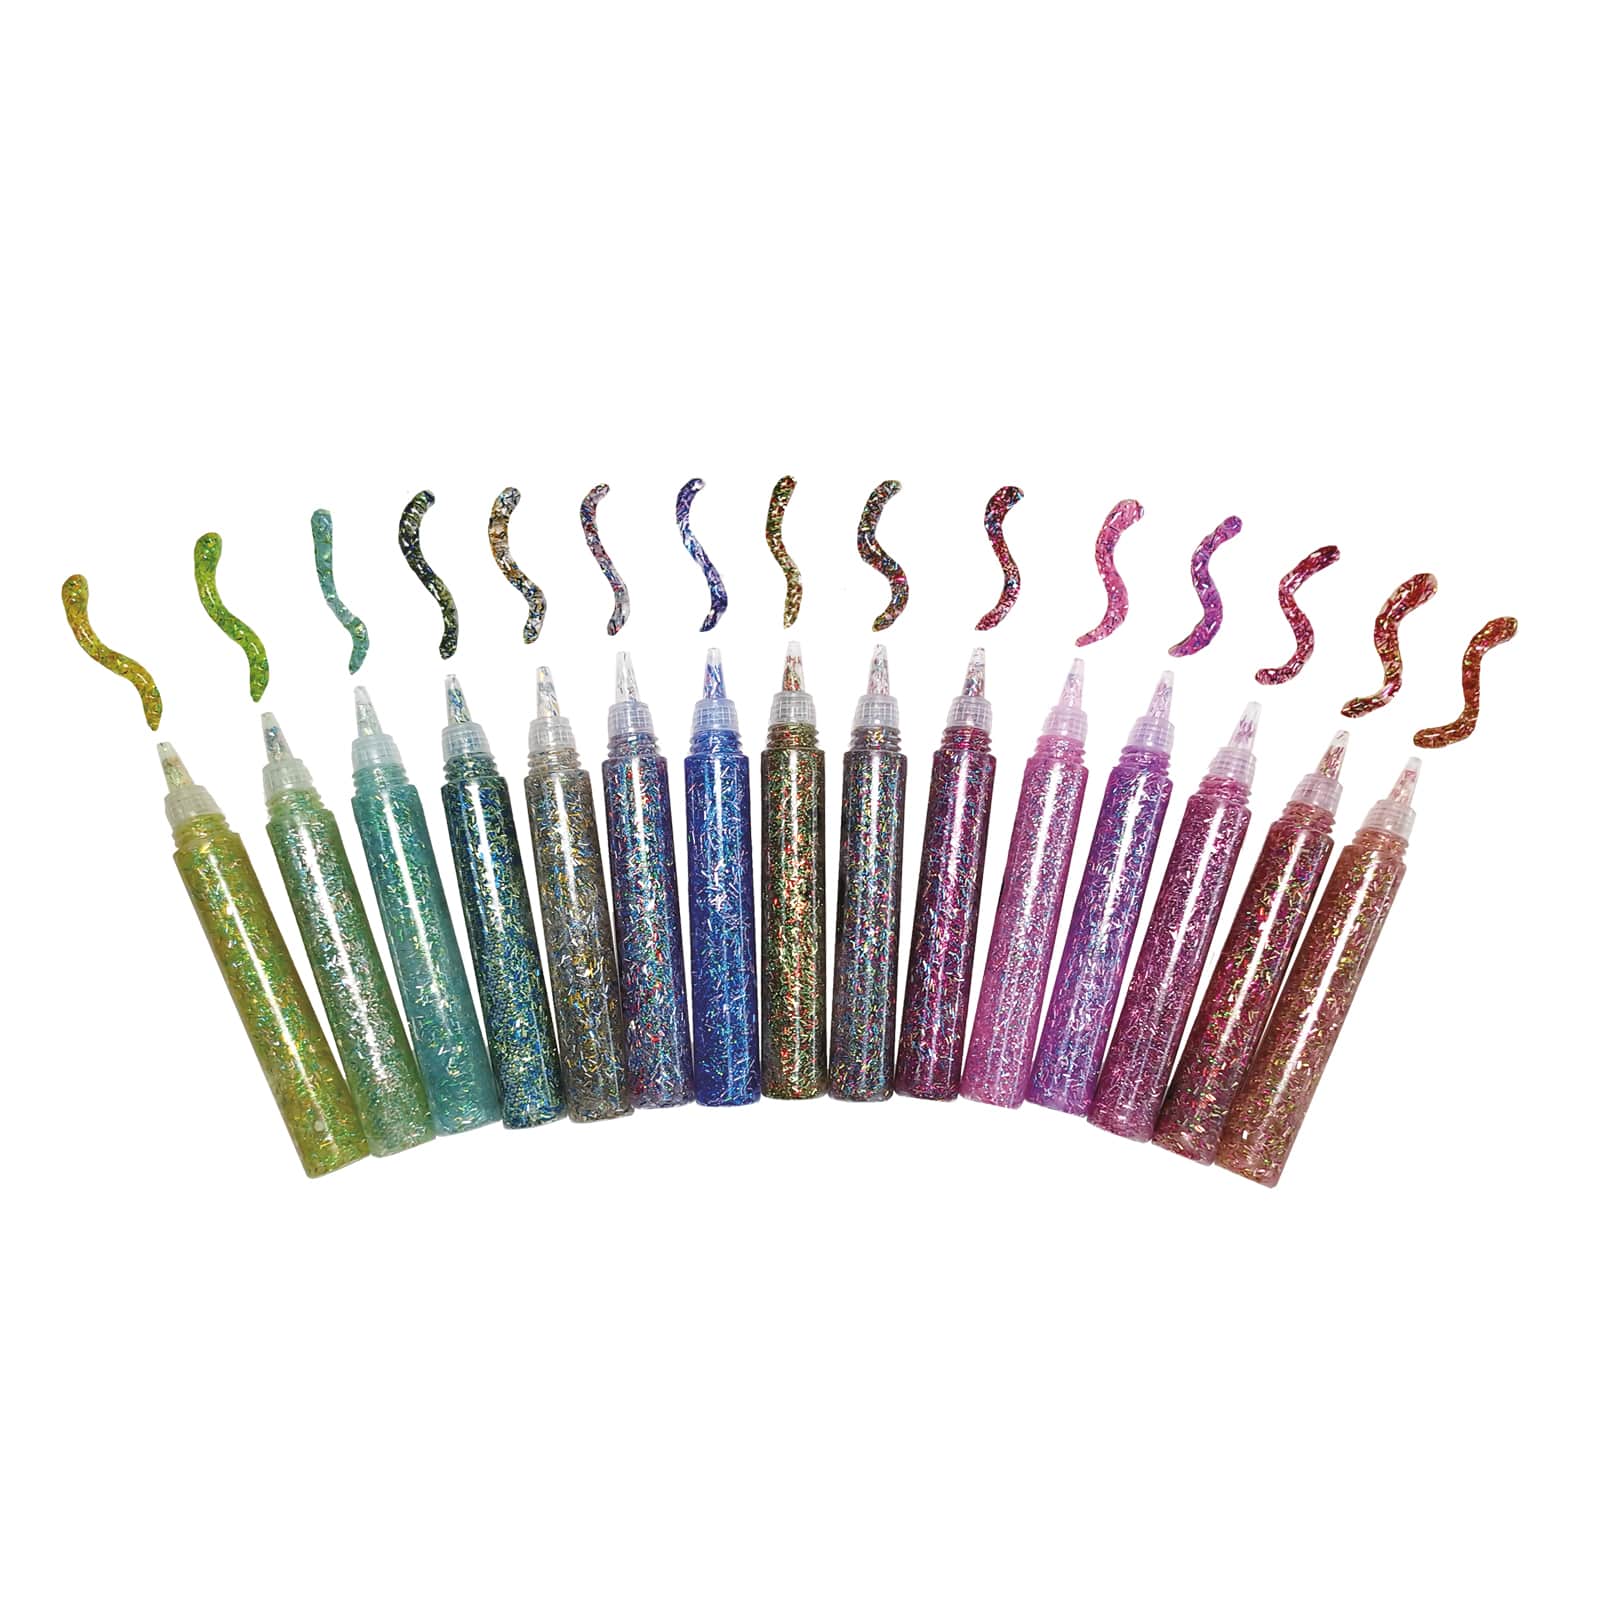 Elmer's® Washable Disappearing Purple School Glue Sticks, 6ct.